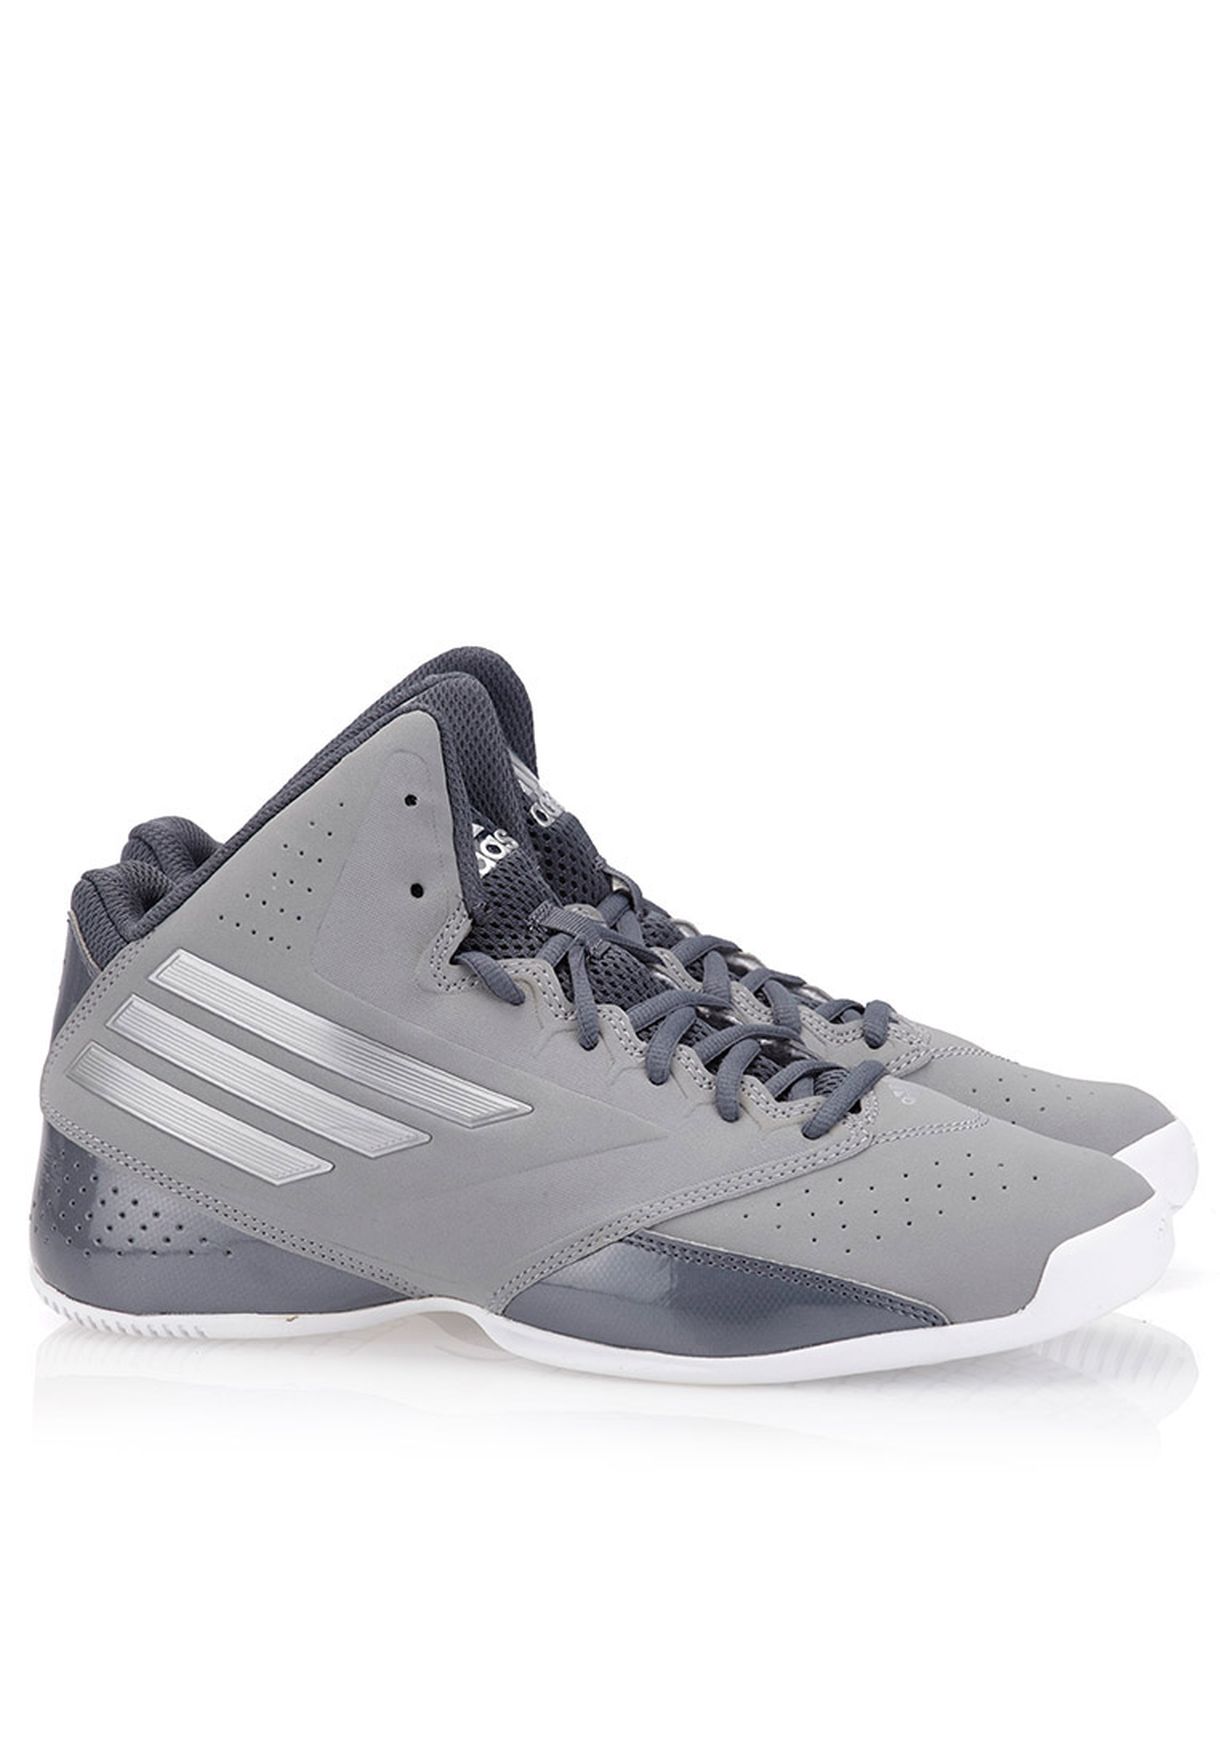 adidas shoes 2014 basketball